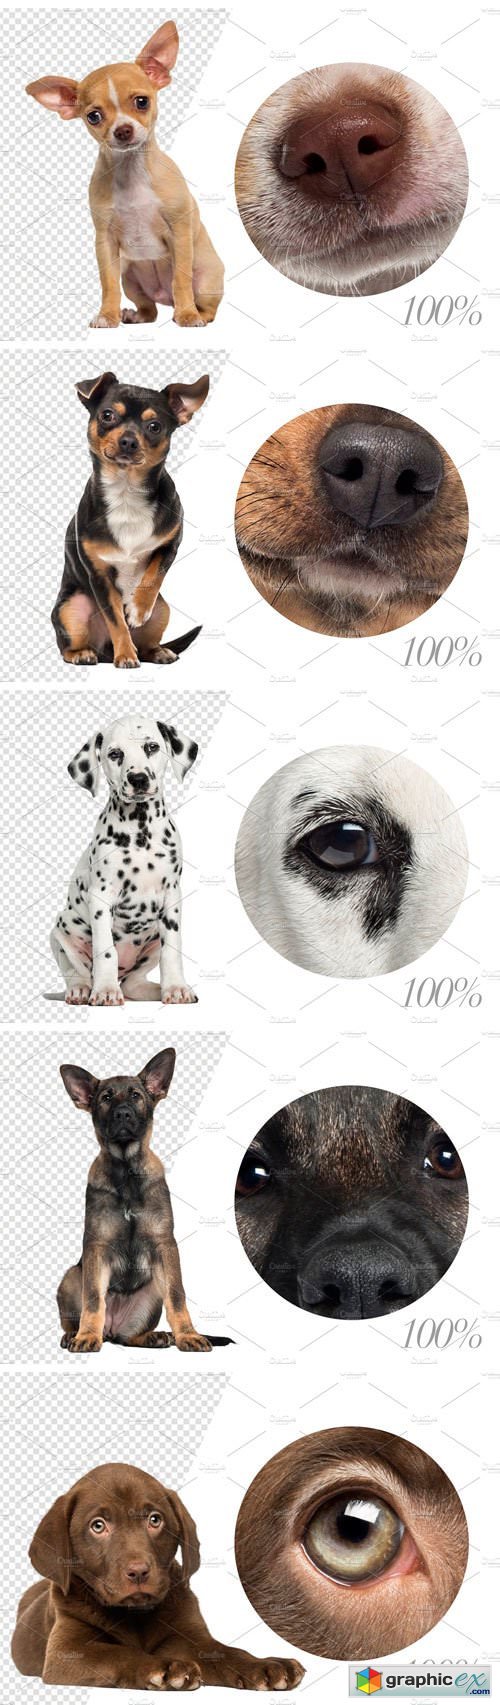 100 Dogs Bundle - Cut-out Pictures